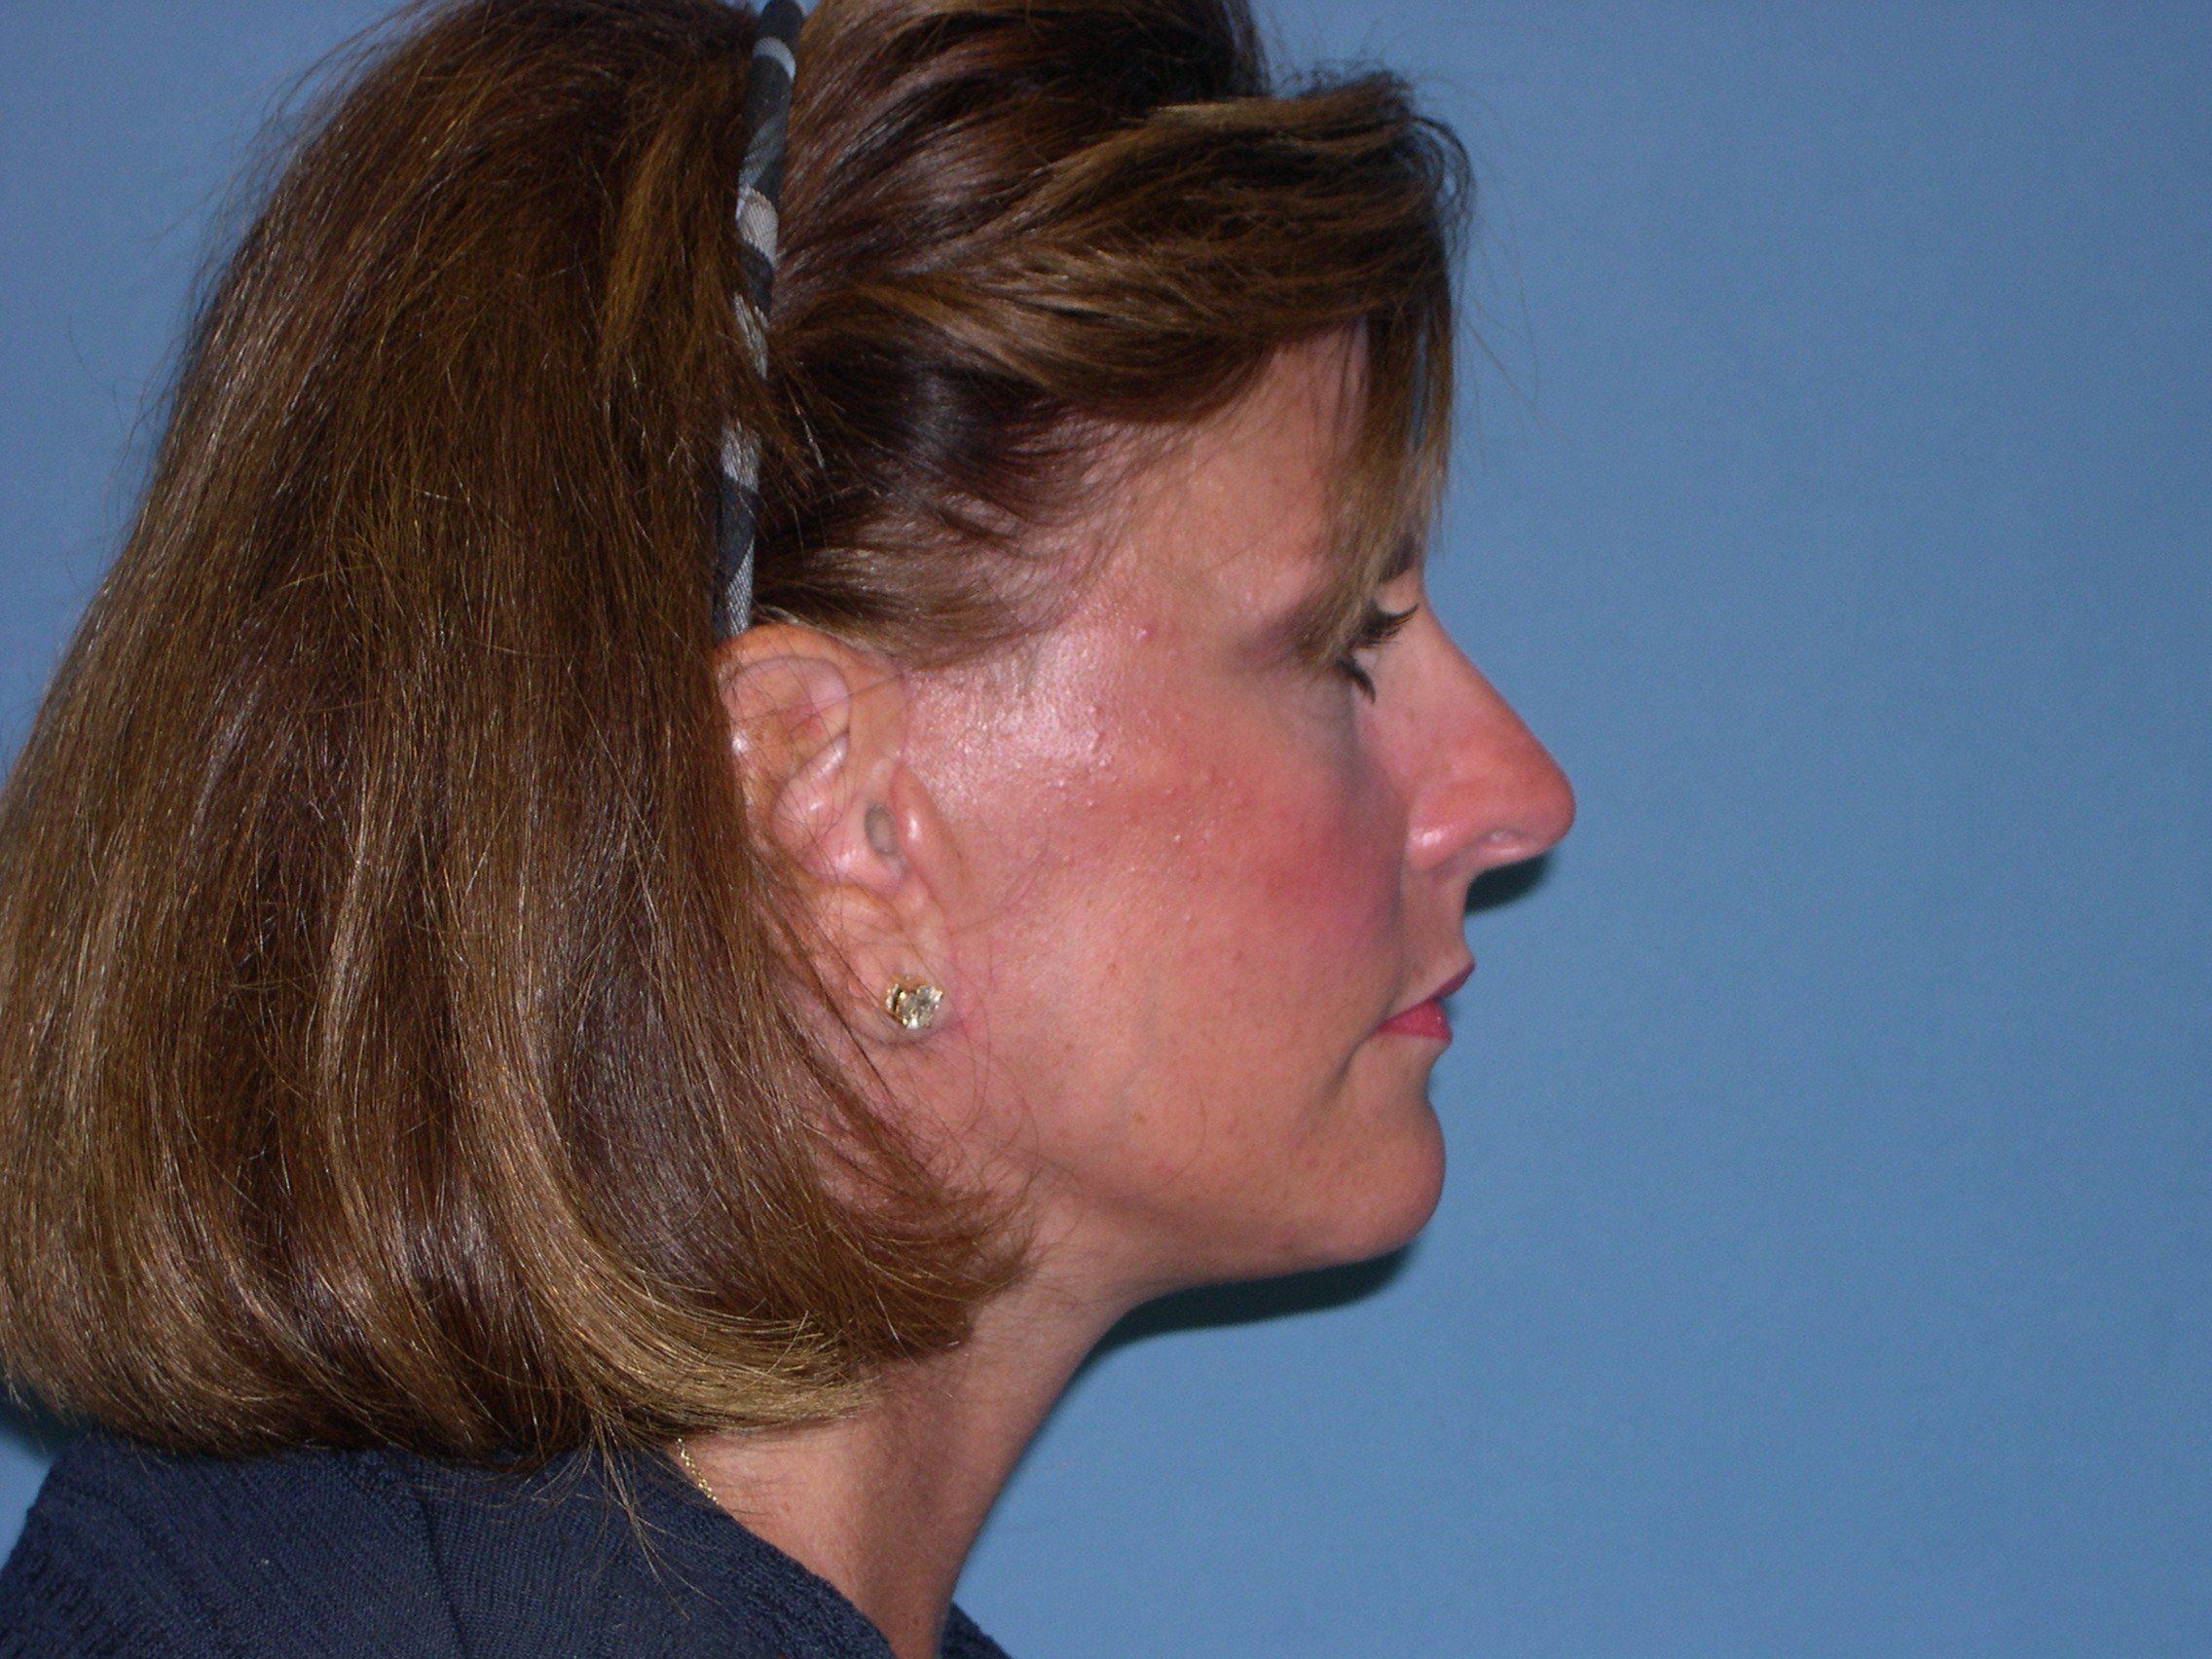 Bradenton facial implants